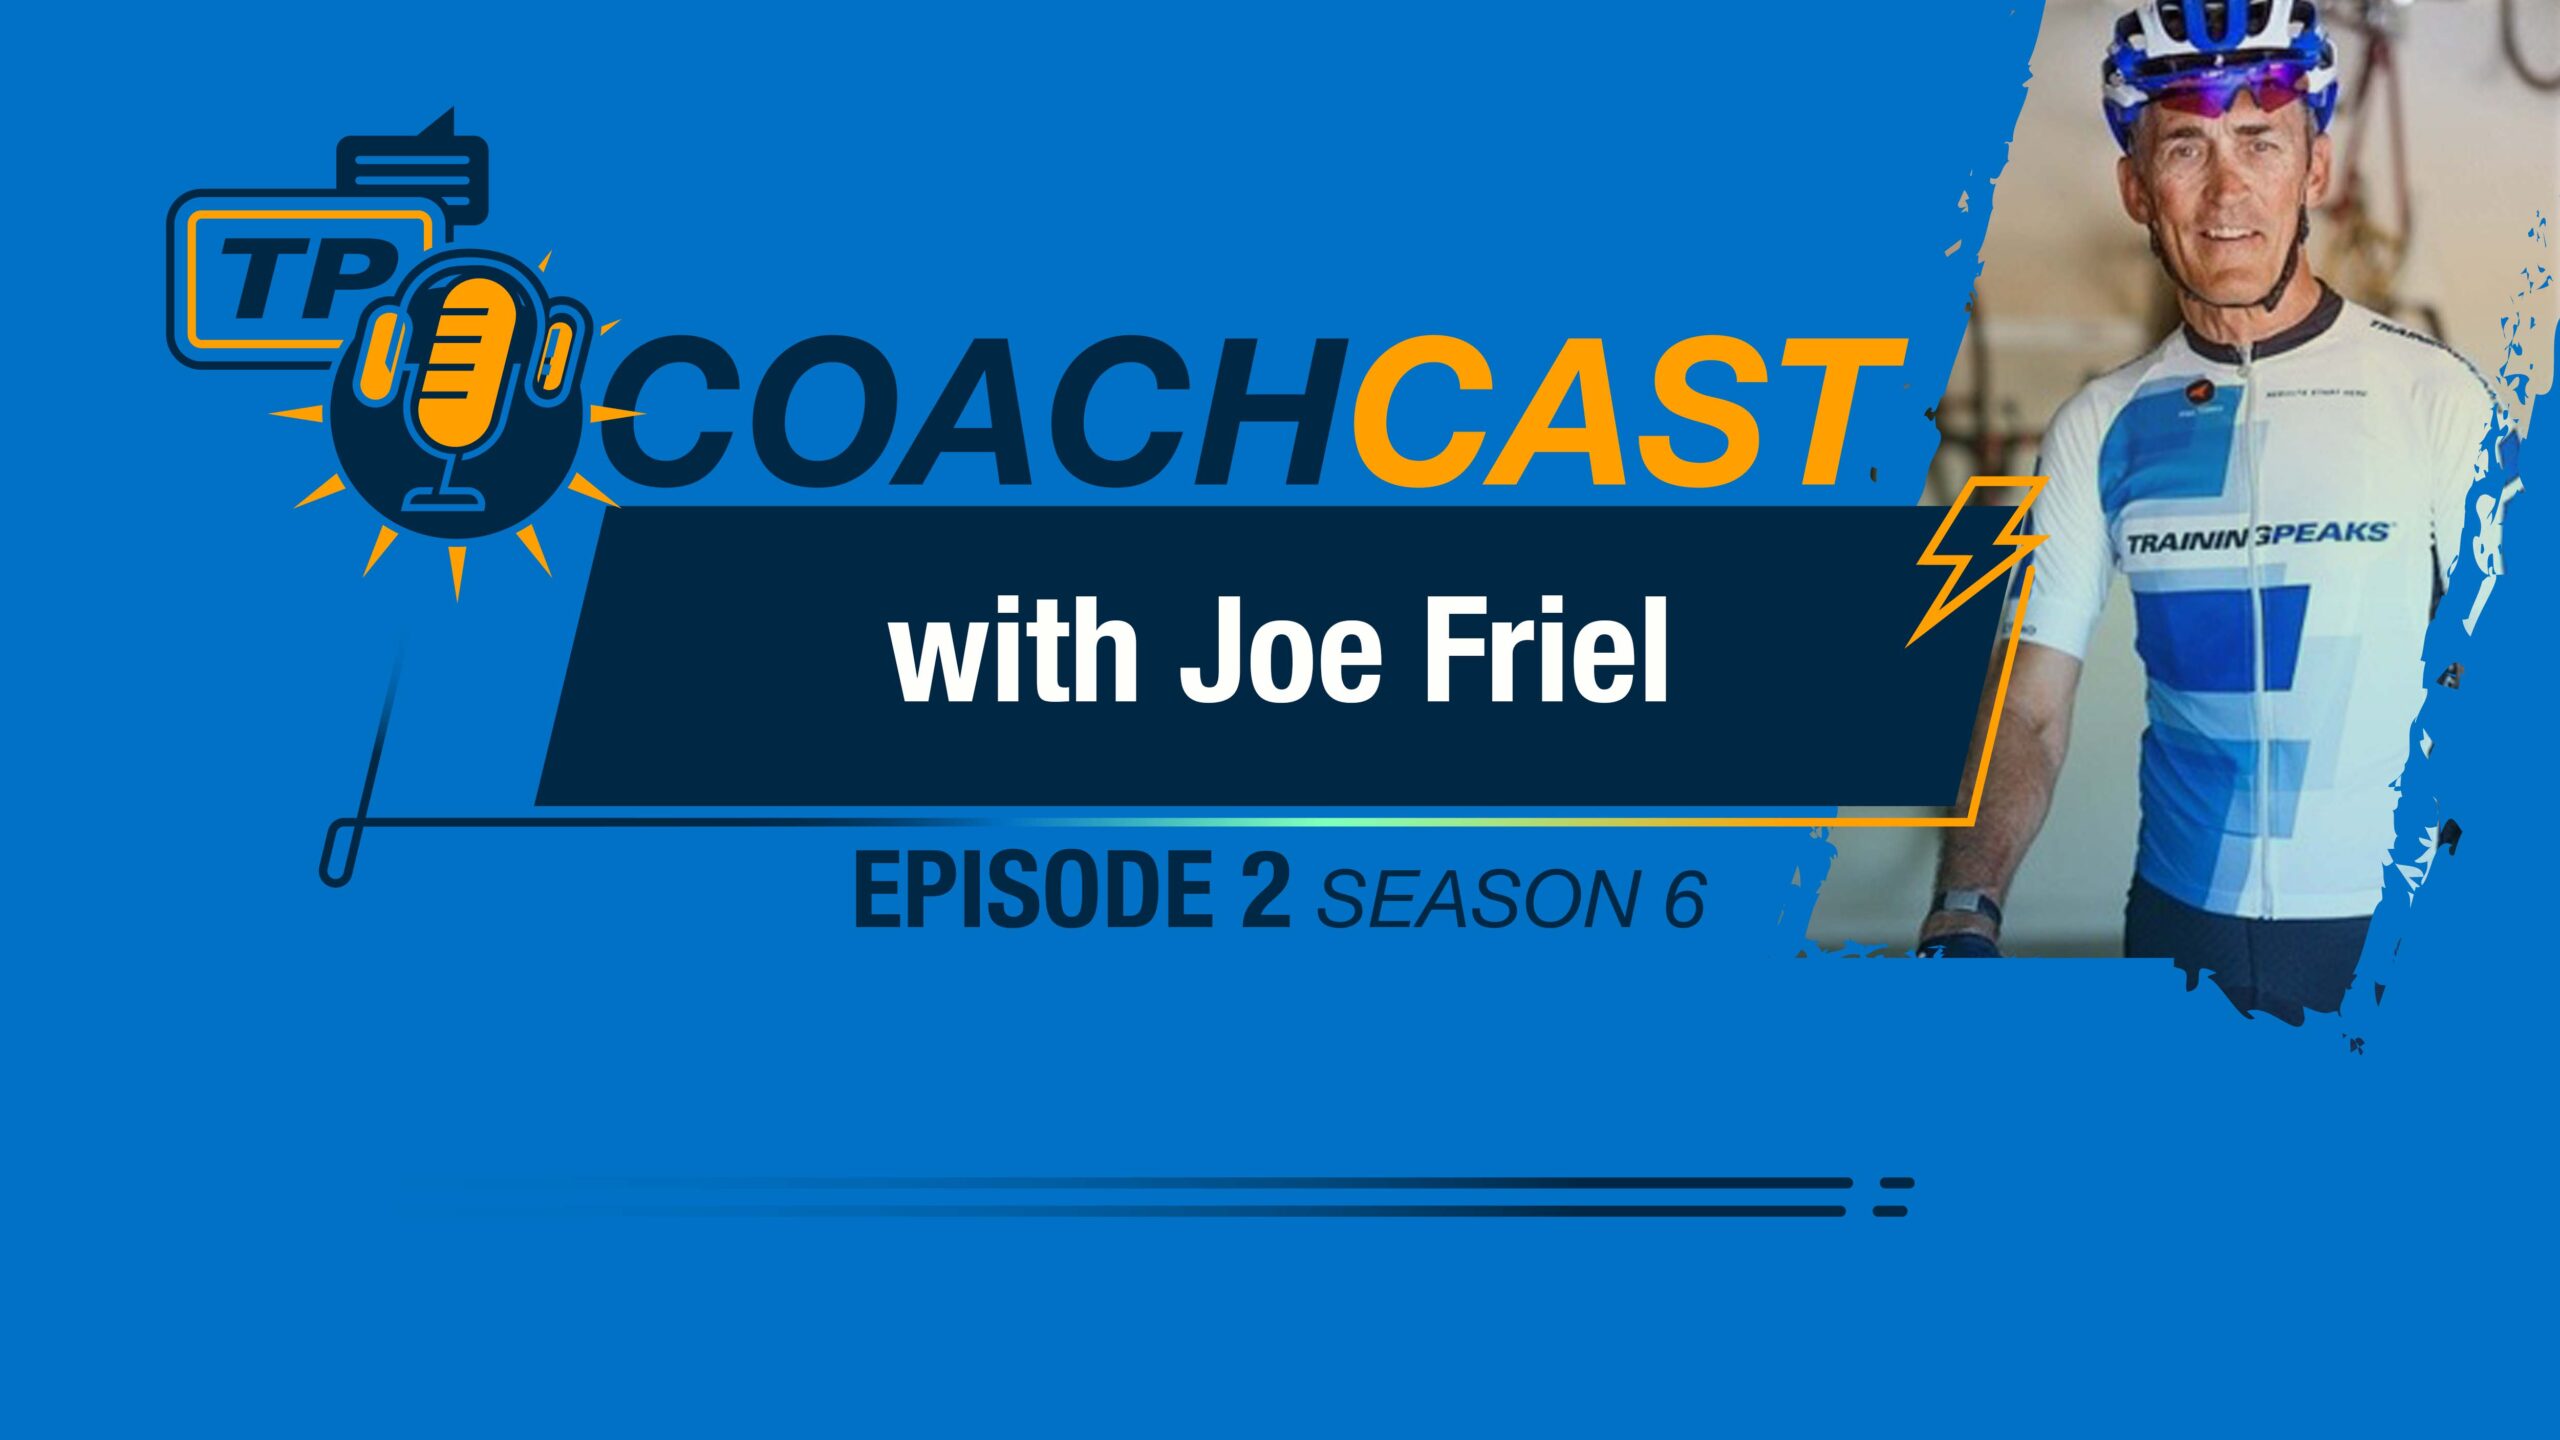 Coachcast Title Card For Joe Friel Interview Season 6 Episode 2